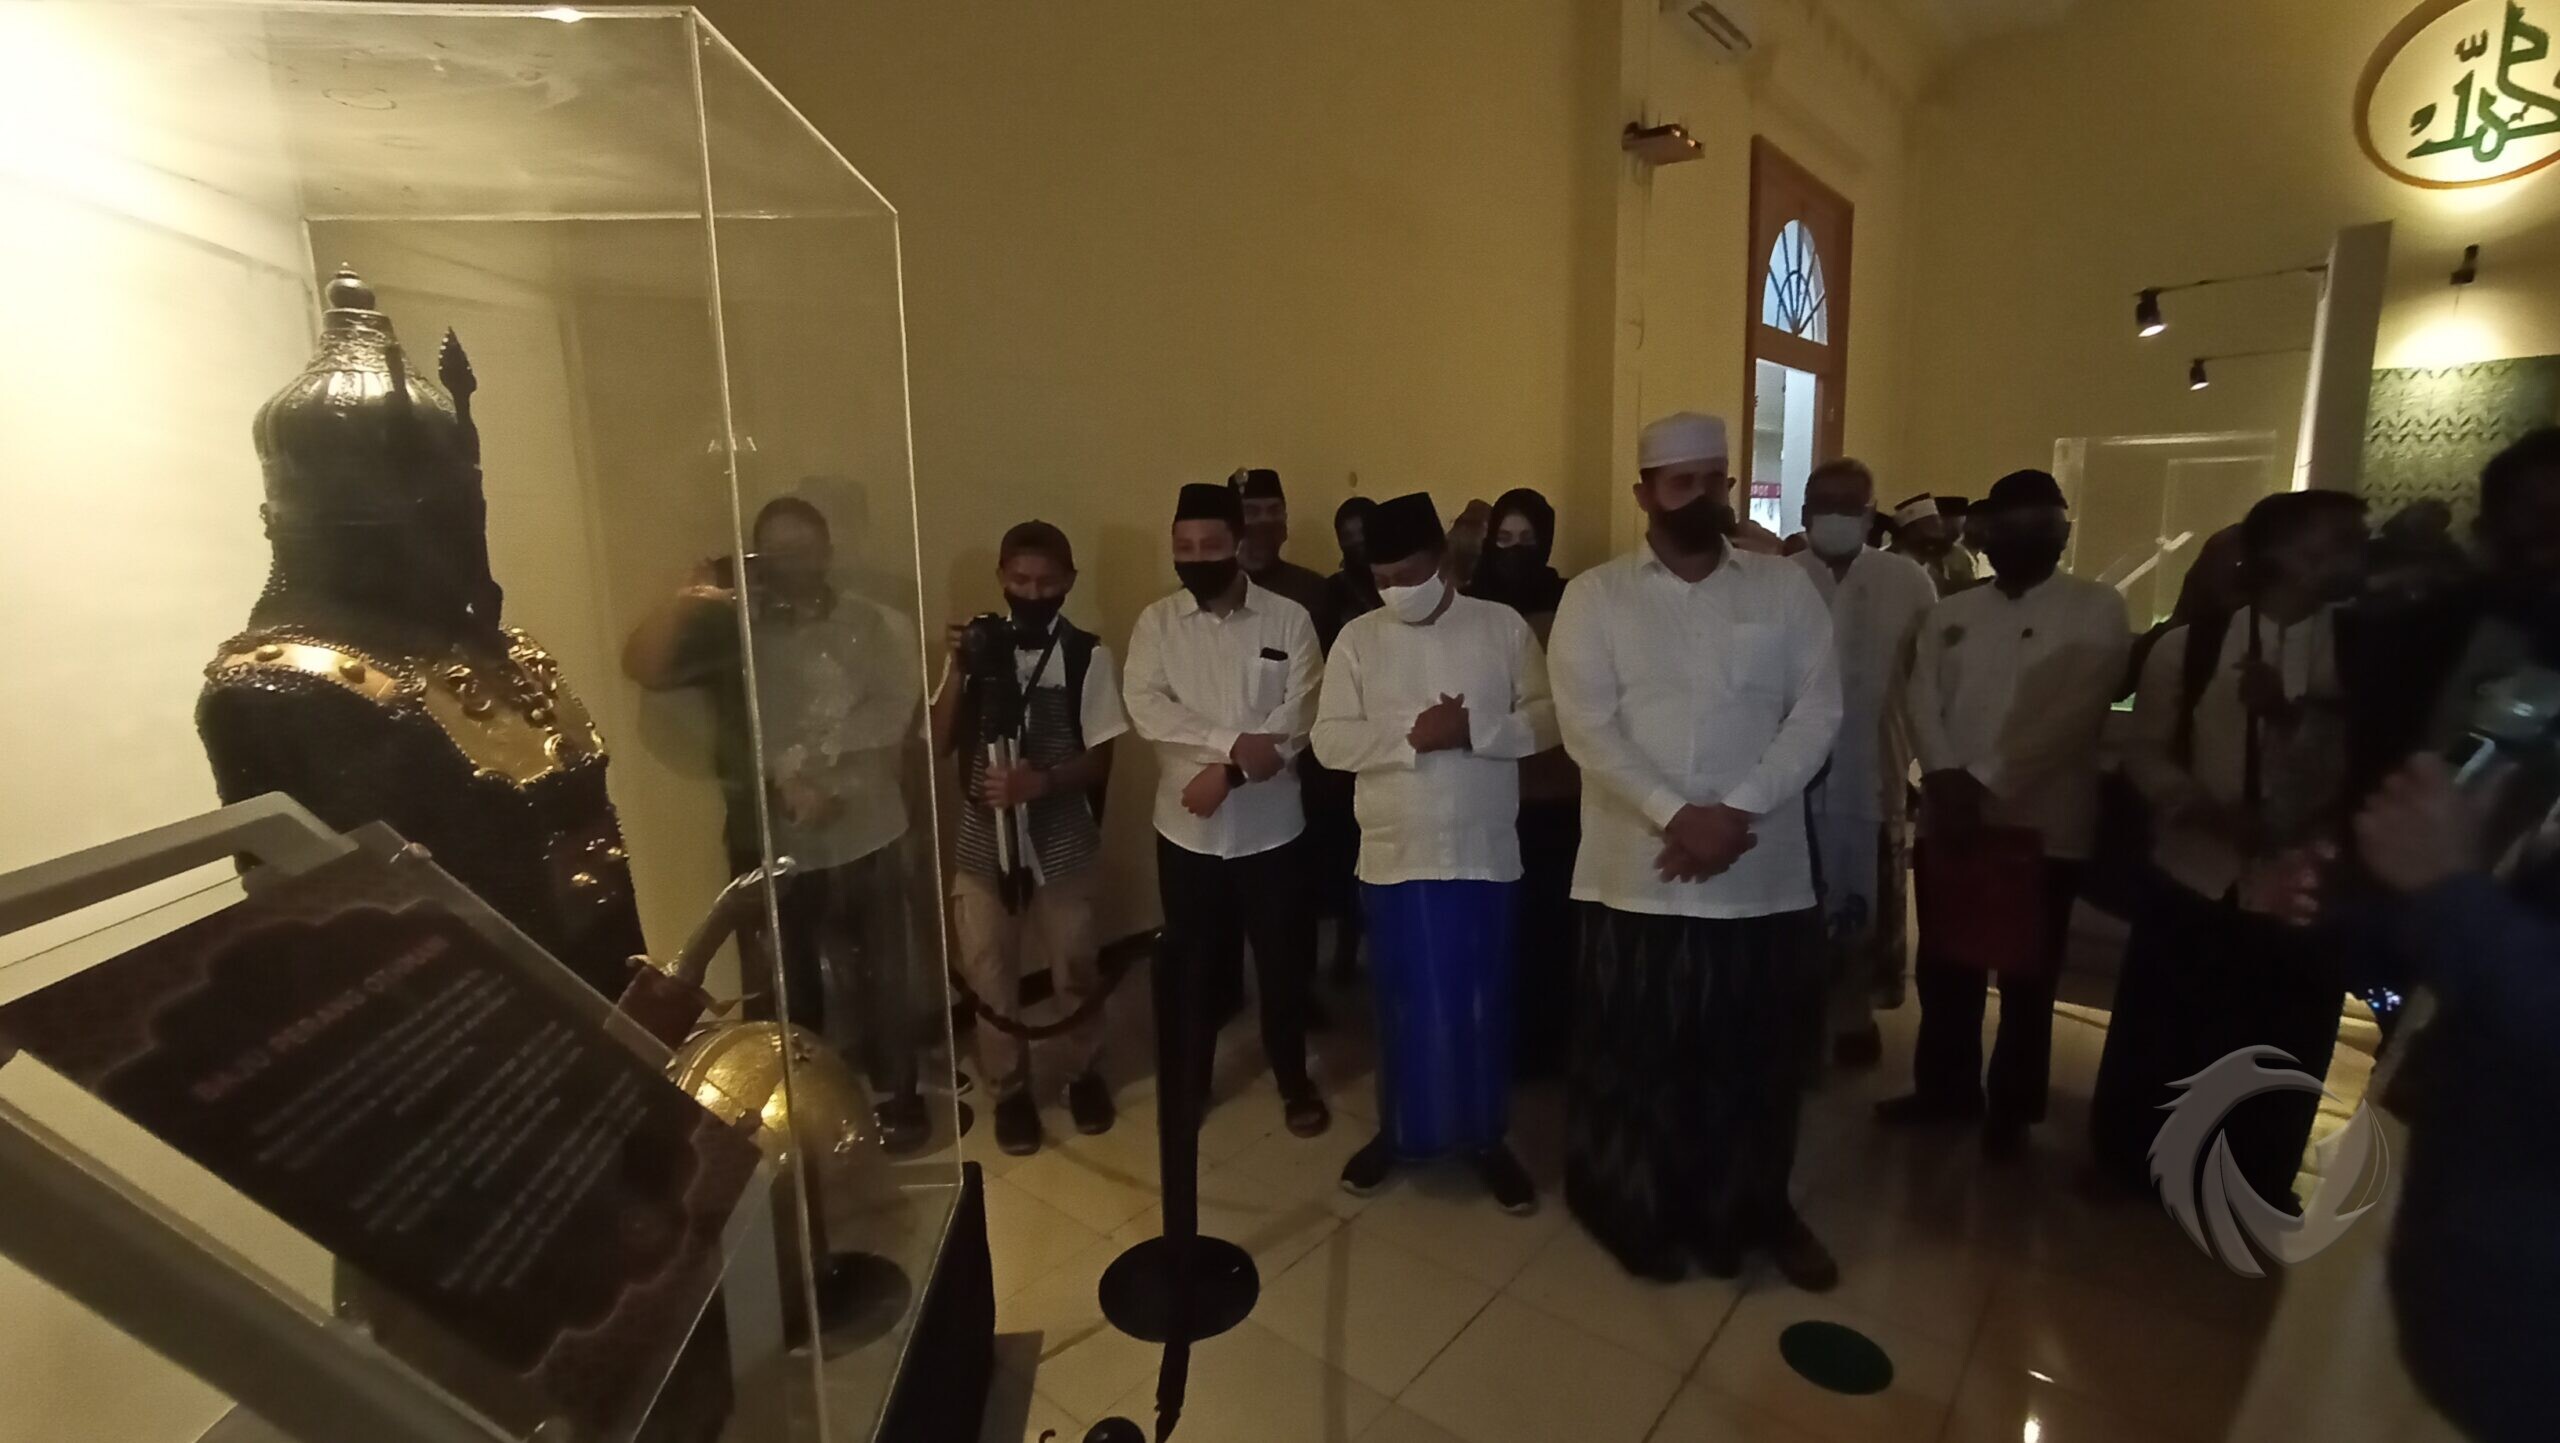 Walikota Probolinggo, Habib Hadi Zainal Abidin, melihat artefak yang ada di dalam museum Rasulullah SAW, Kamis (22/10/2020). FaktualNews.co/Agus Salam/